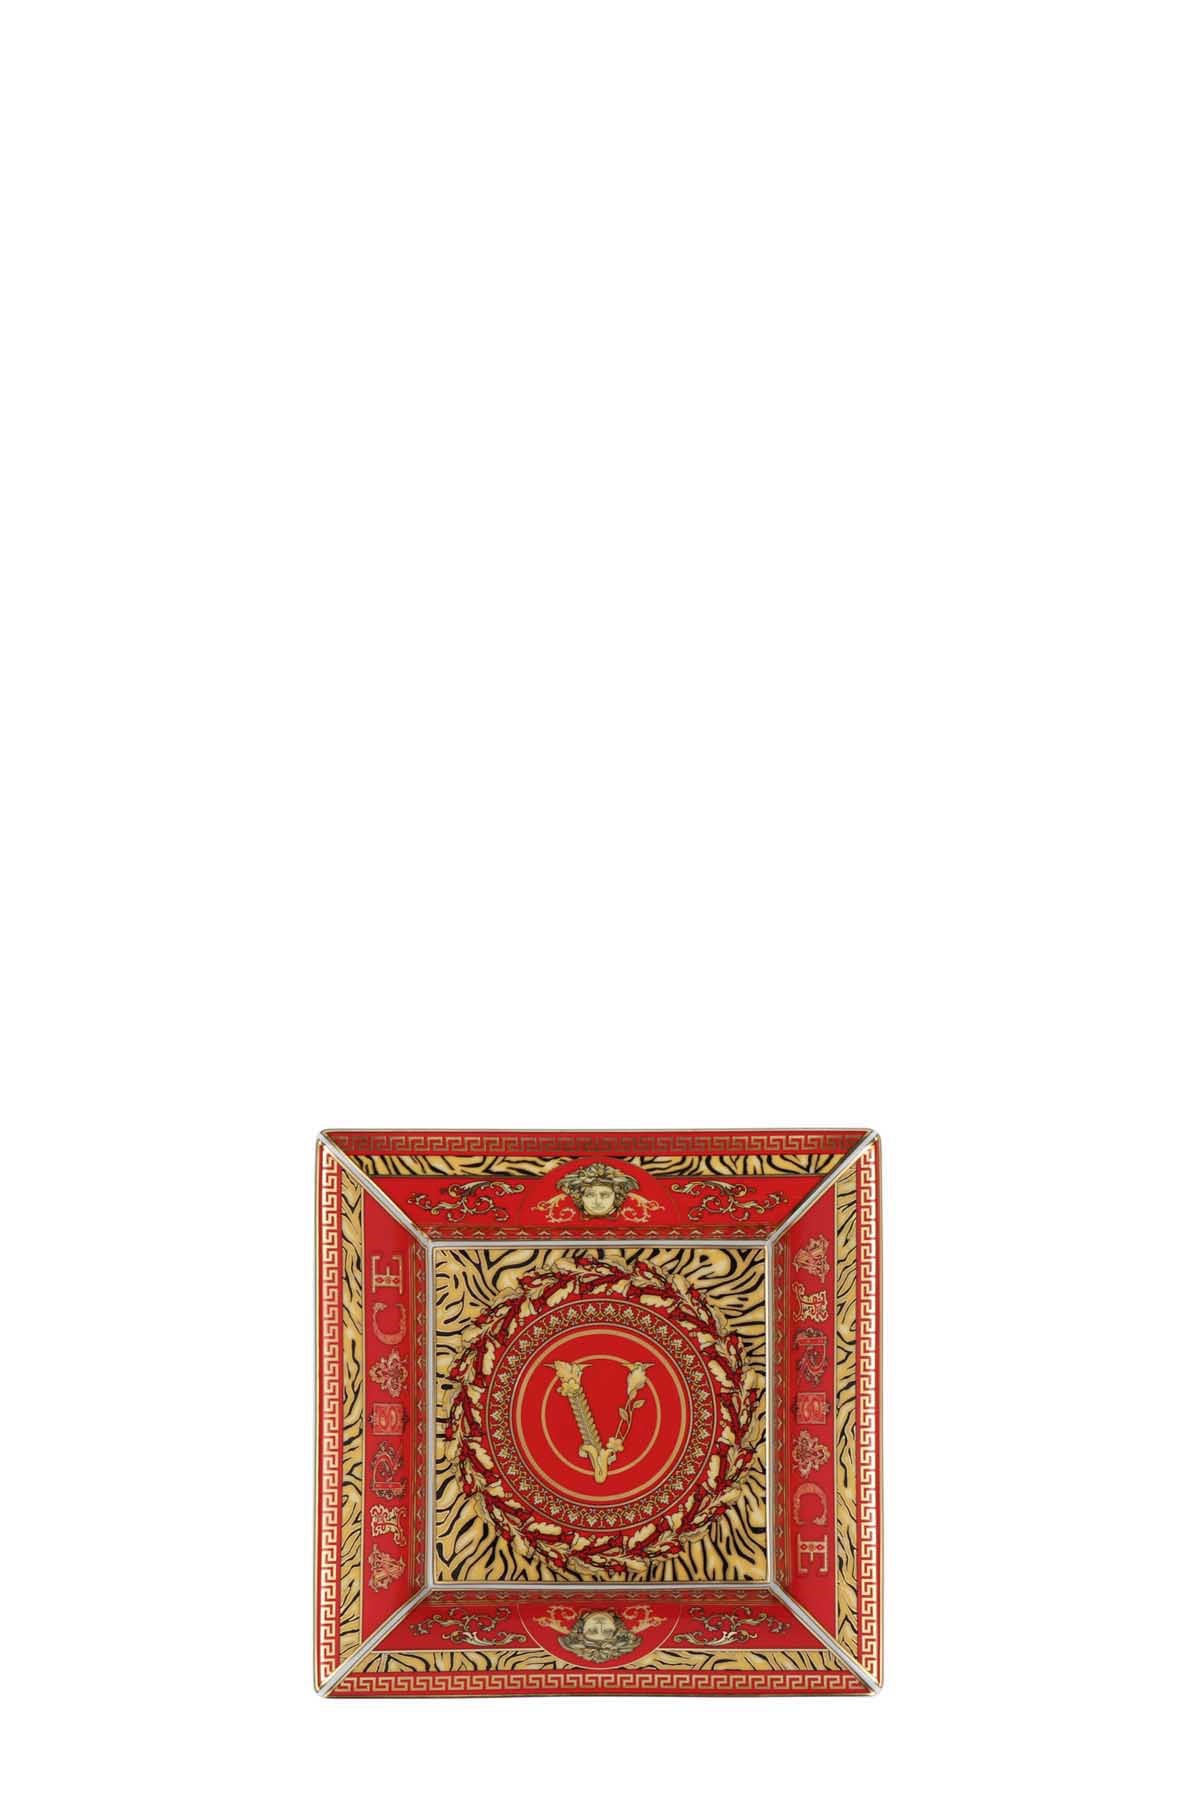 VERSACE HOME 'Versace Christmas’ Valet Tray